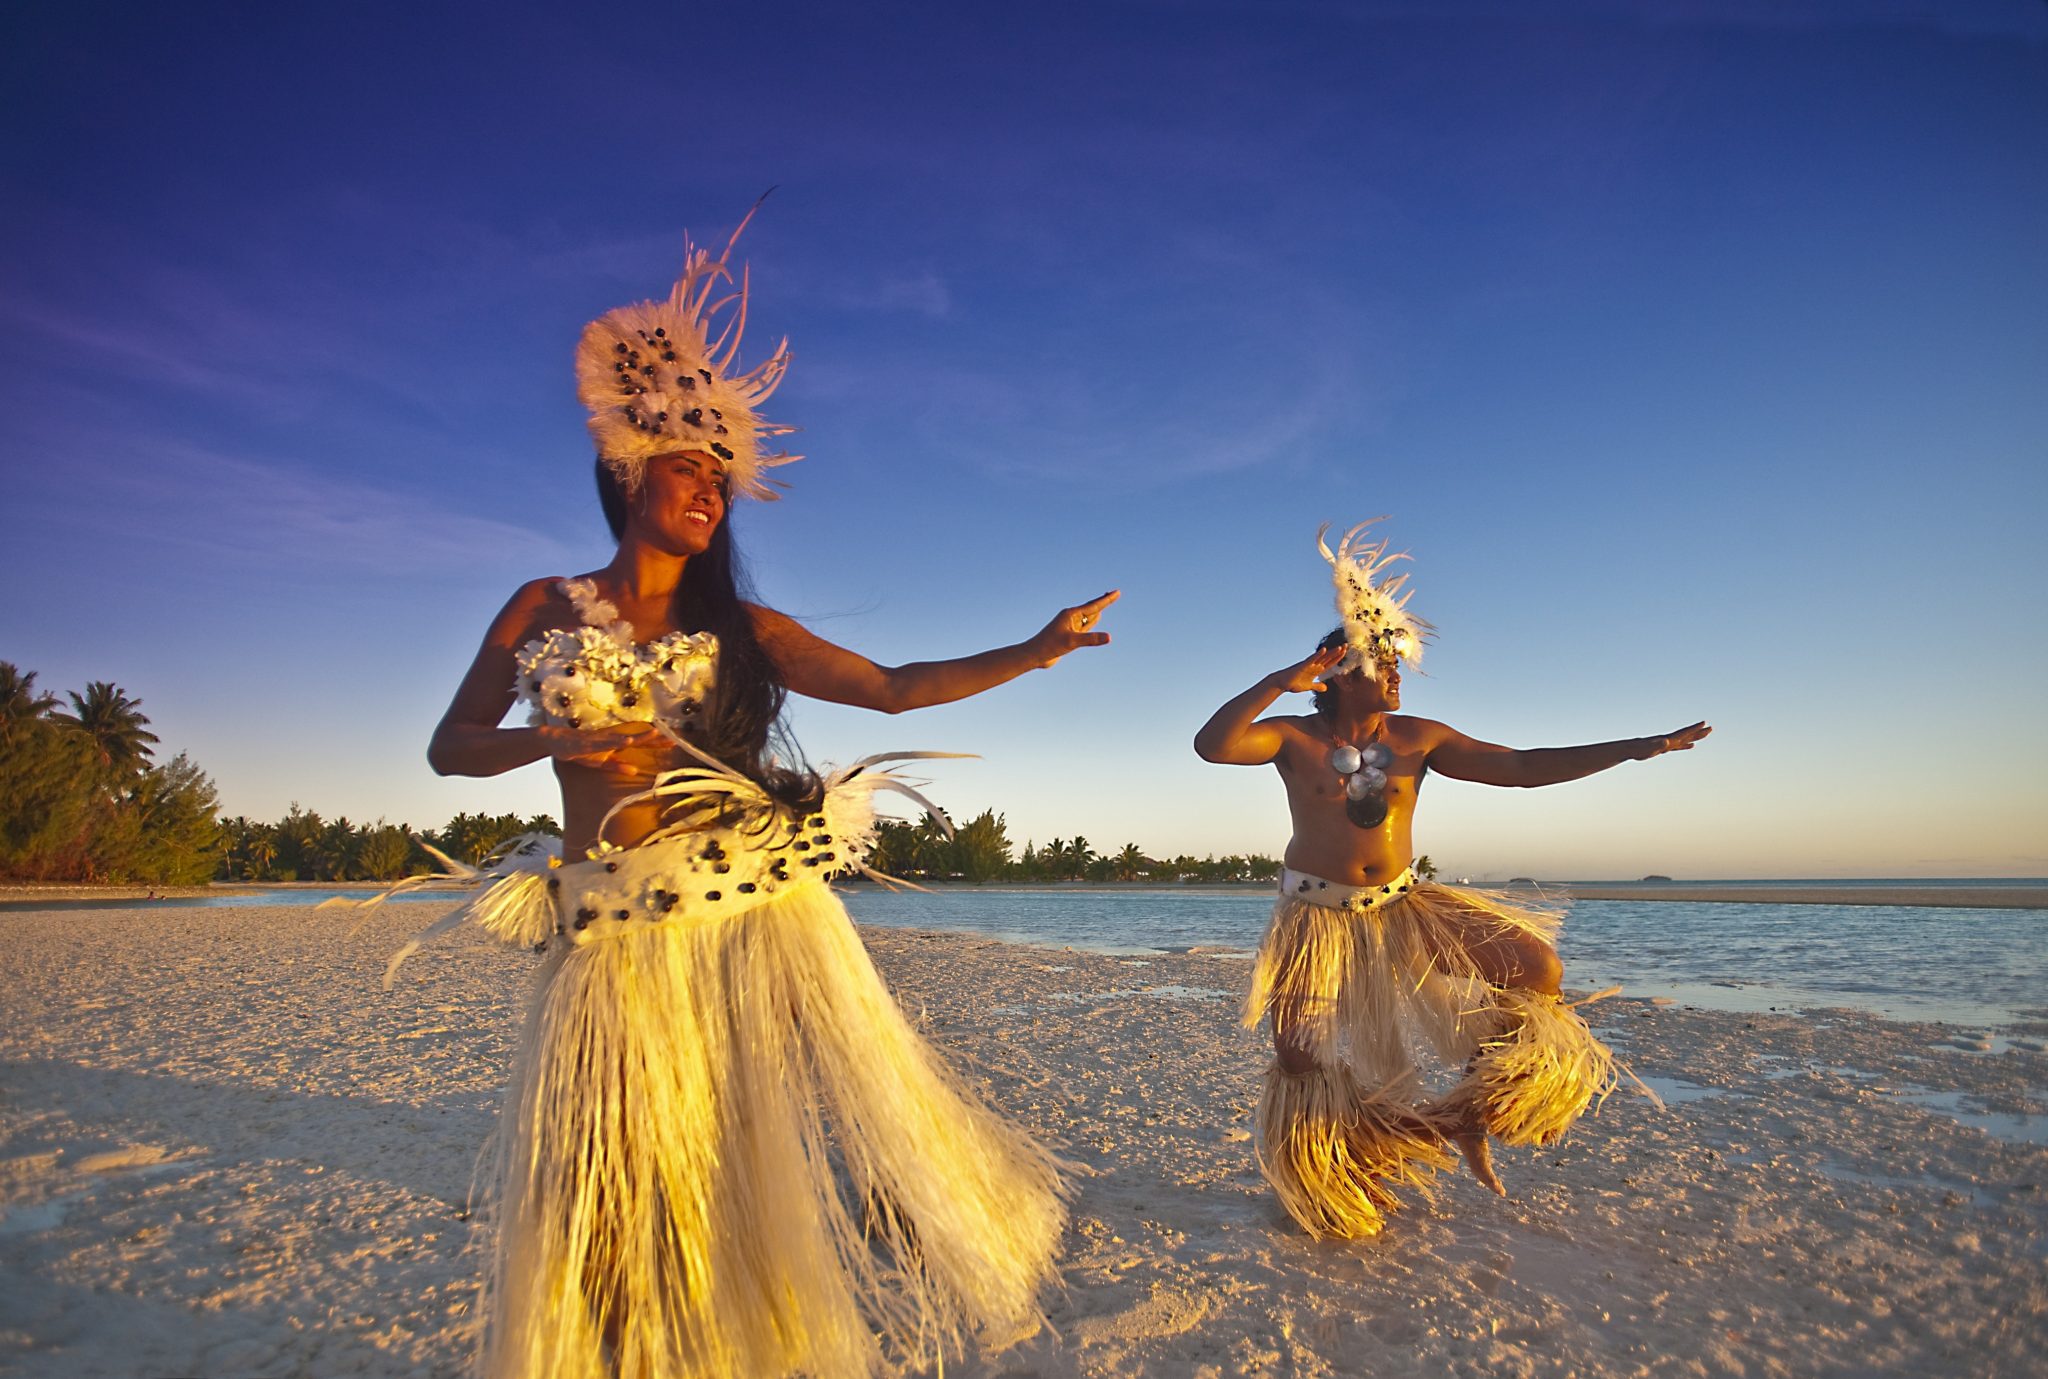 Destination Cook Islands - About Cook Islands - Pacific Resort